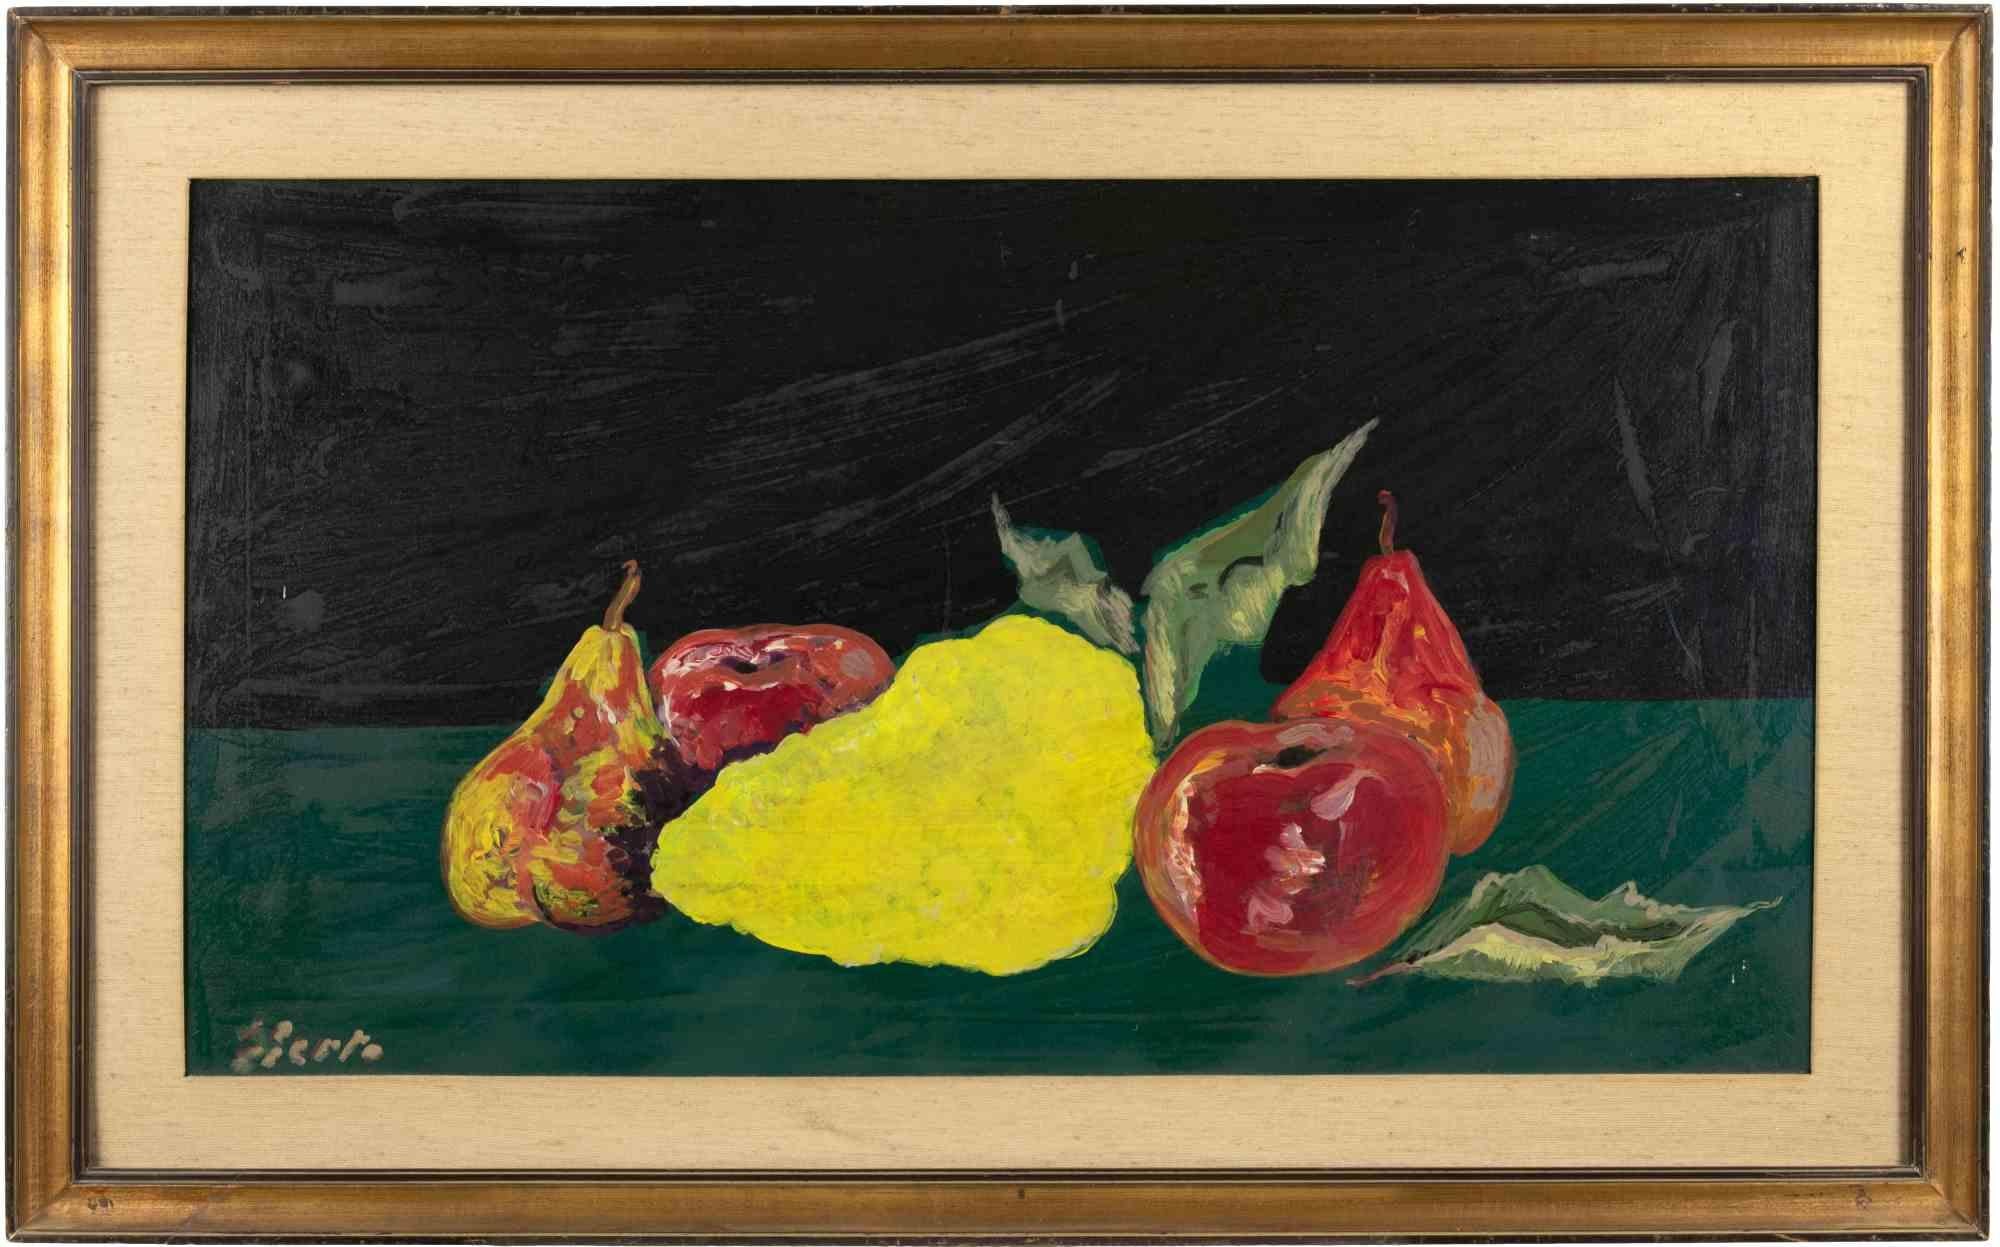 Fruits - Oil Paint by Gianpaolo Berto - 1967